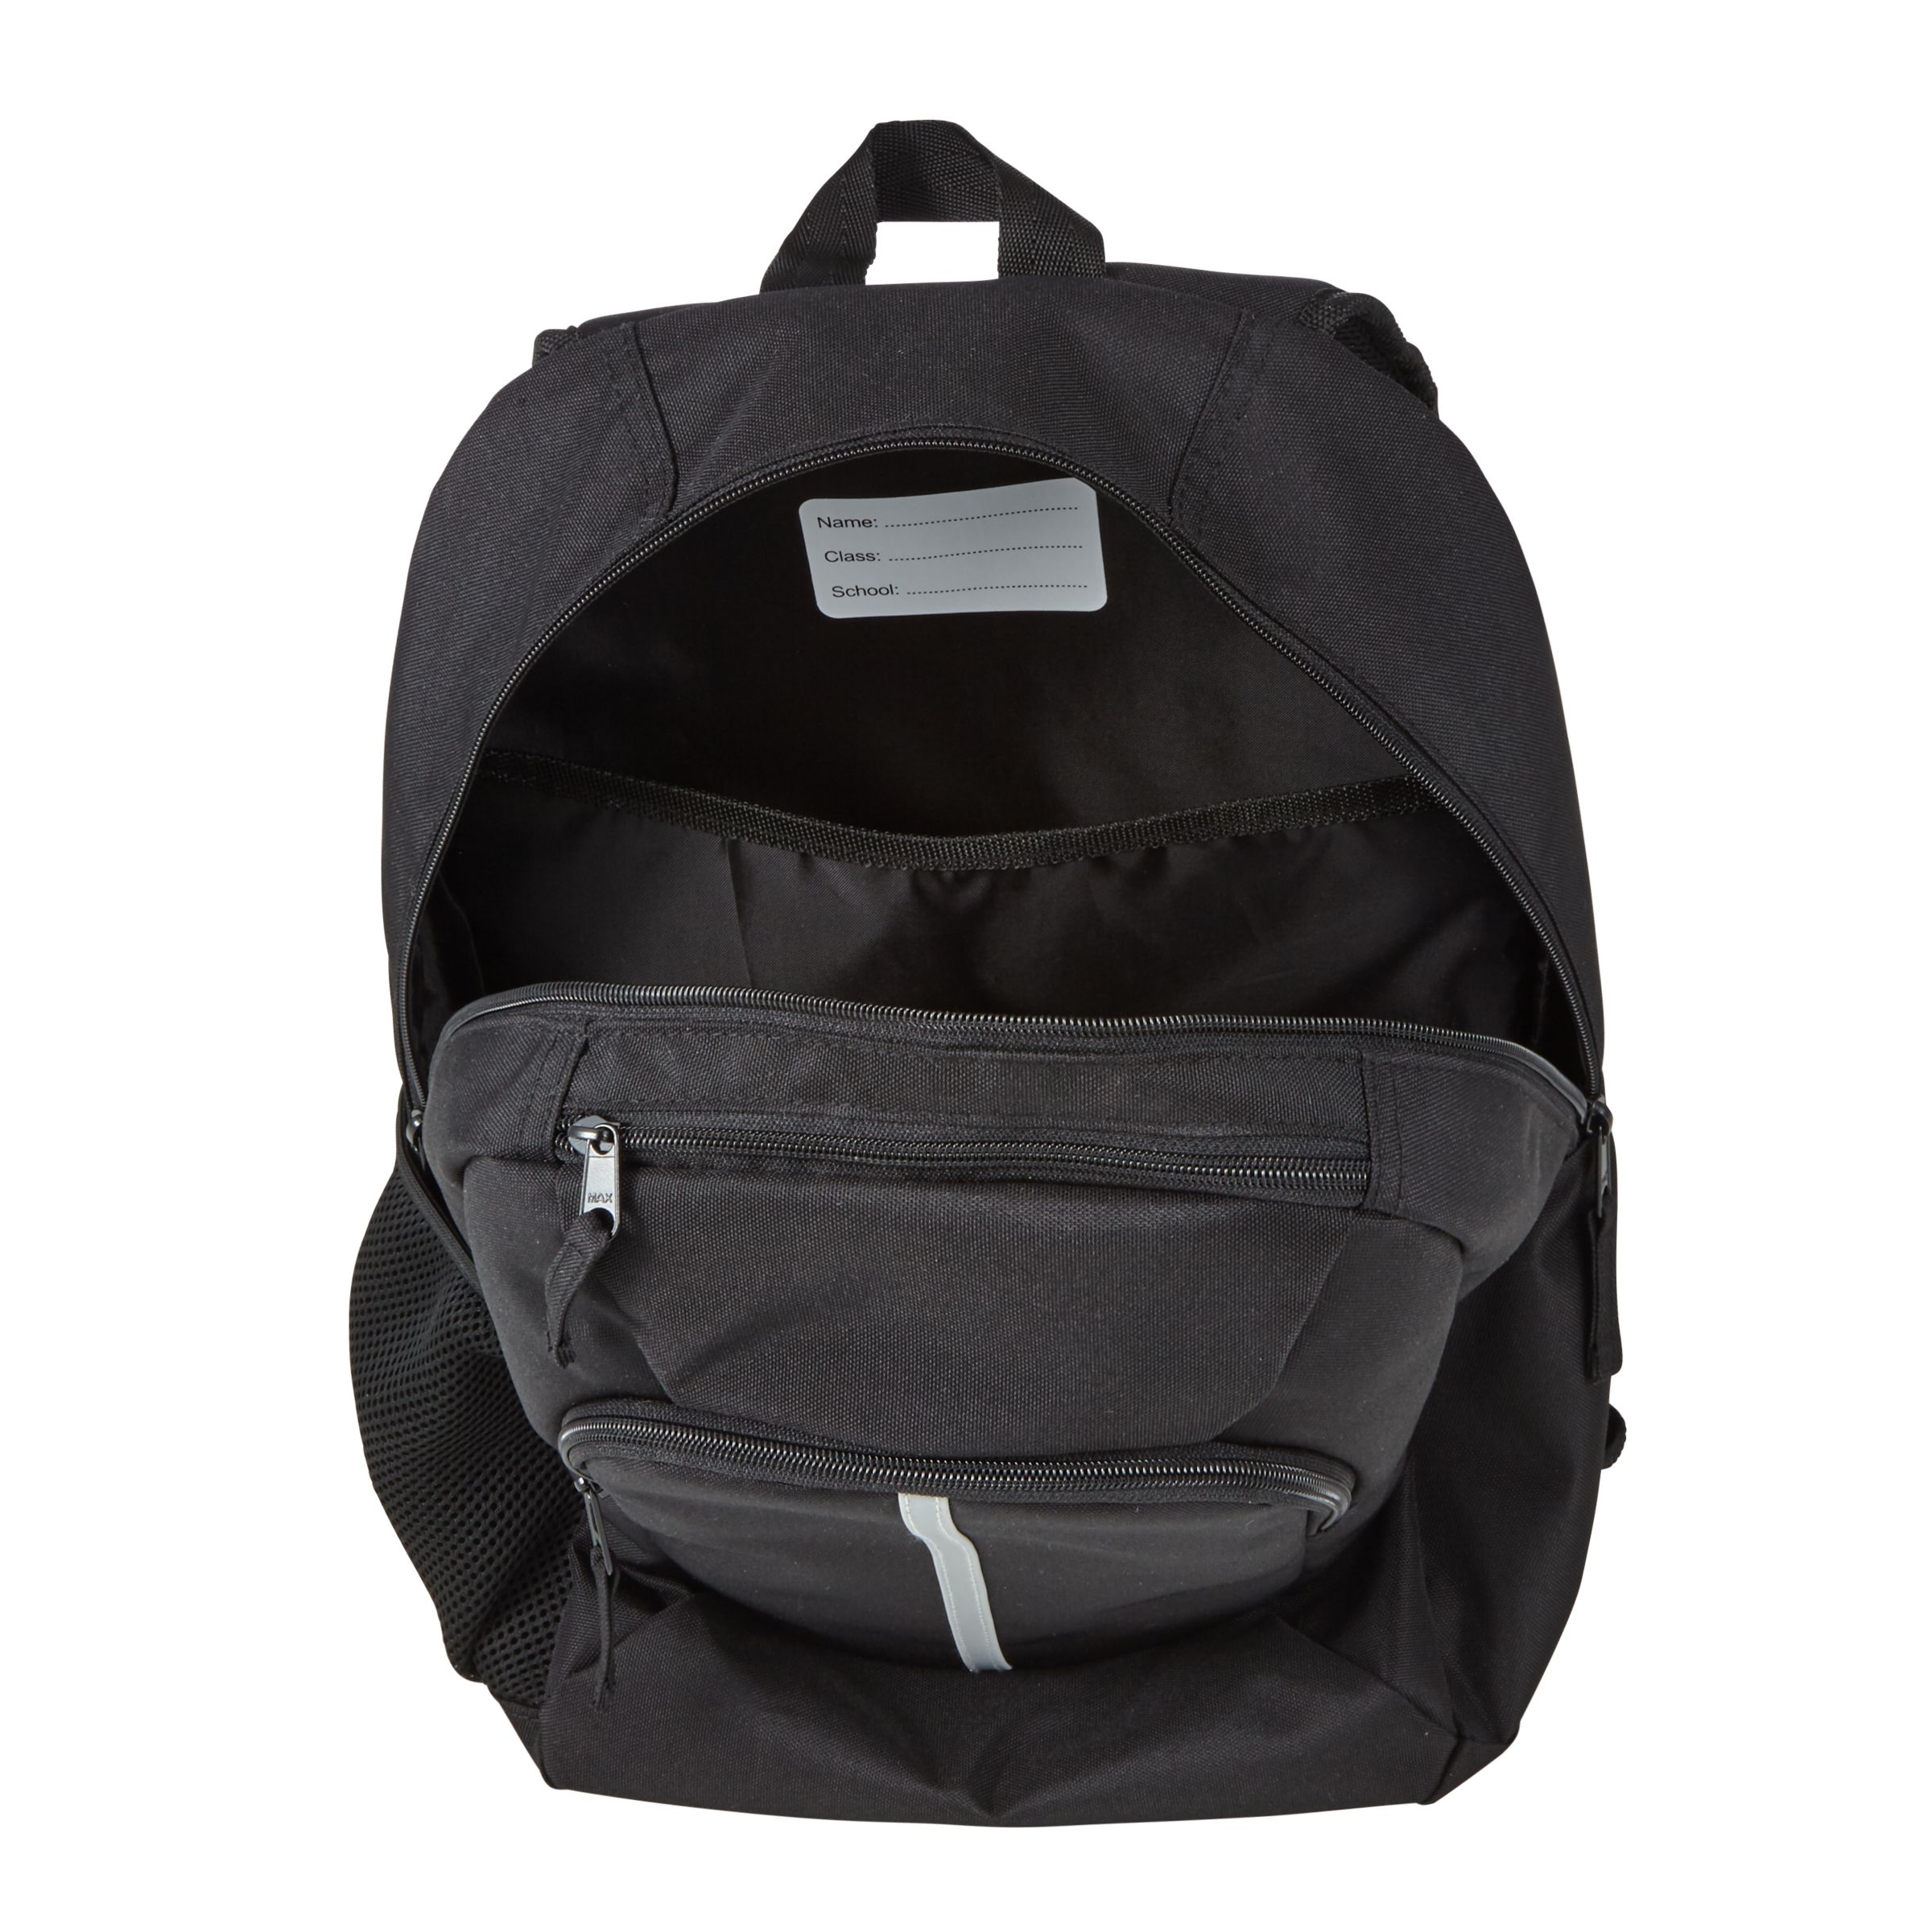 John Lewis & Partners Children's School Backpack, Black